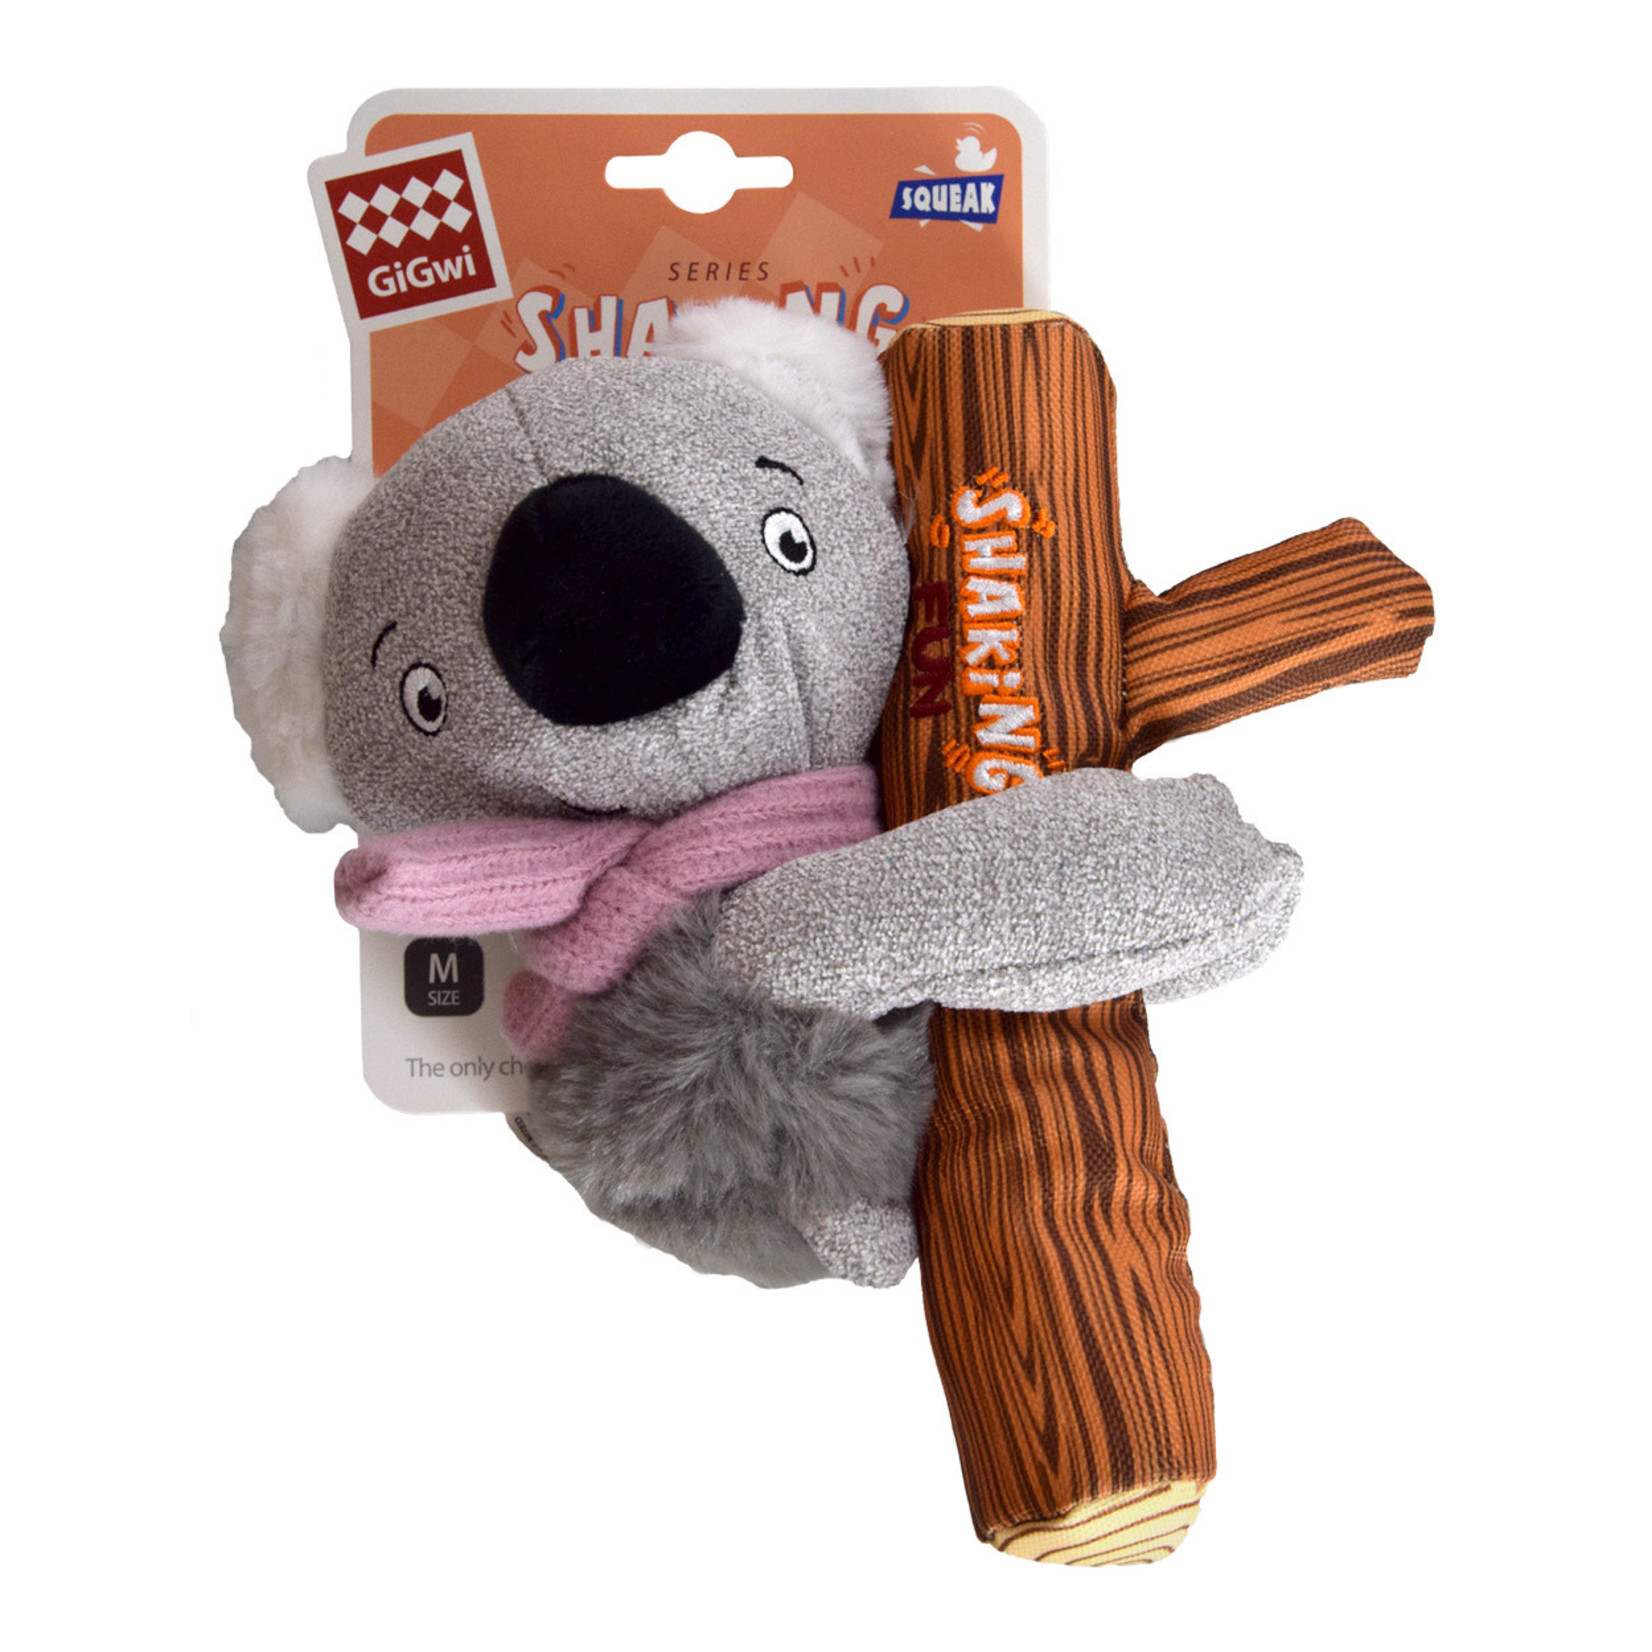 GIGWI GIWI Koala Plush with Squeaker